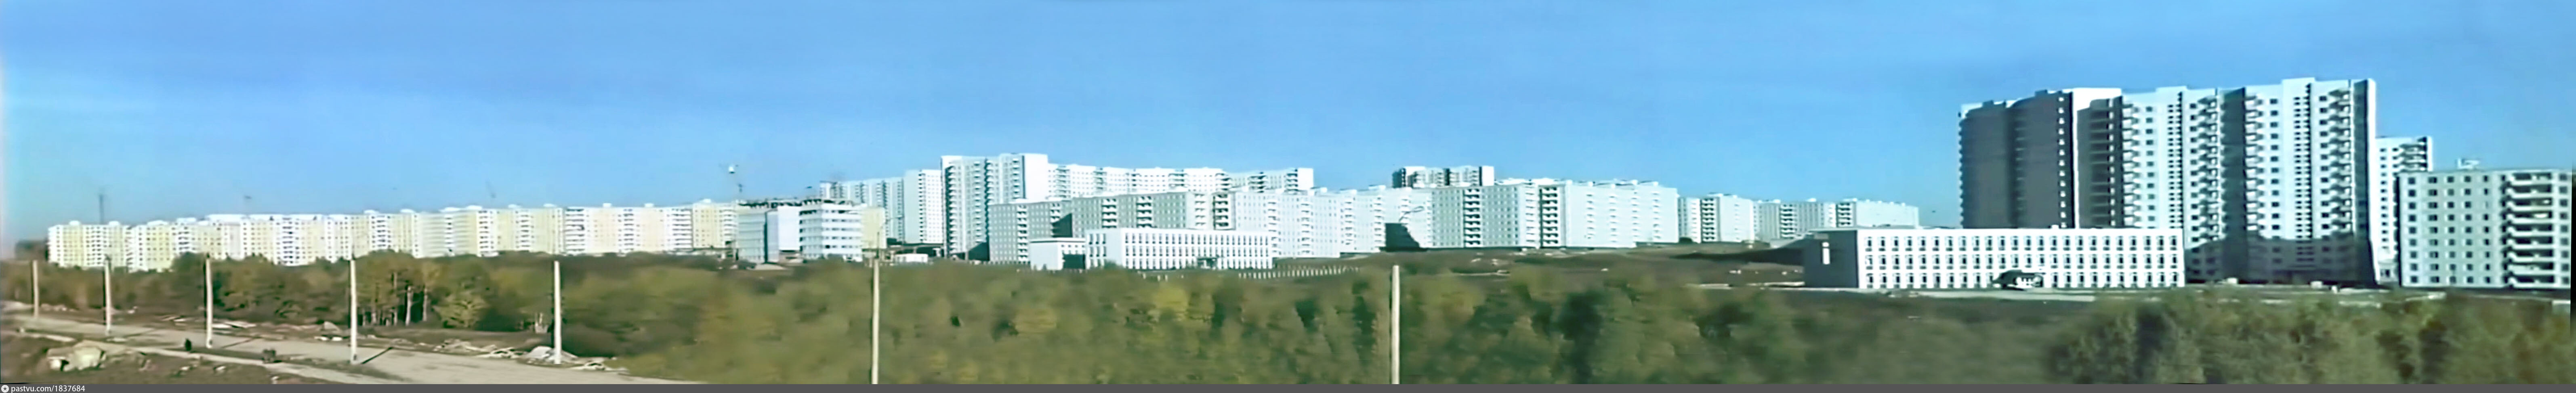 Кэмп ясенево. Ясенево 2020. Завод в Ясенево. Ясенево панорама. Ясенево 1990.